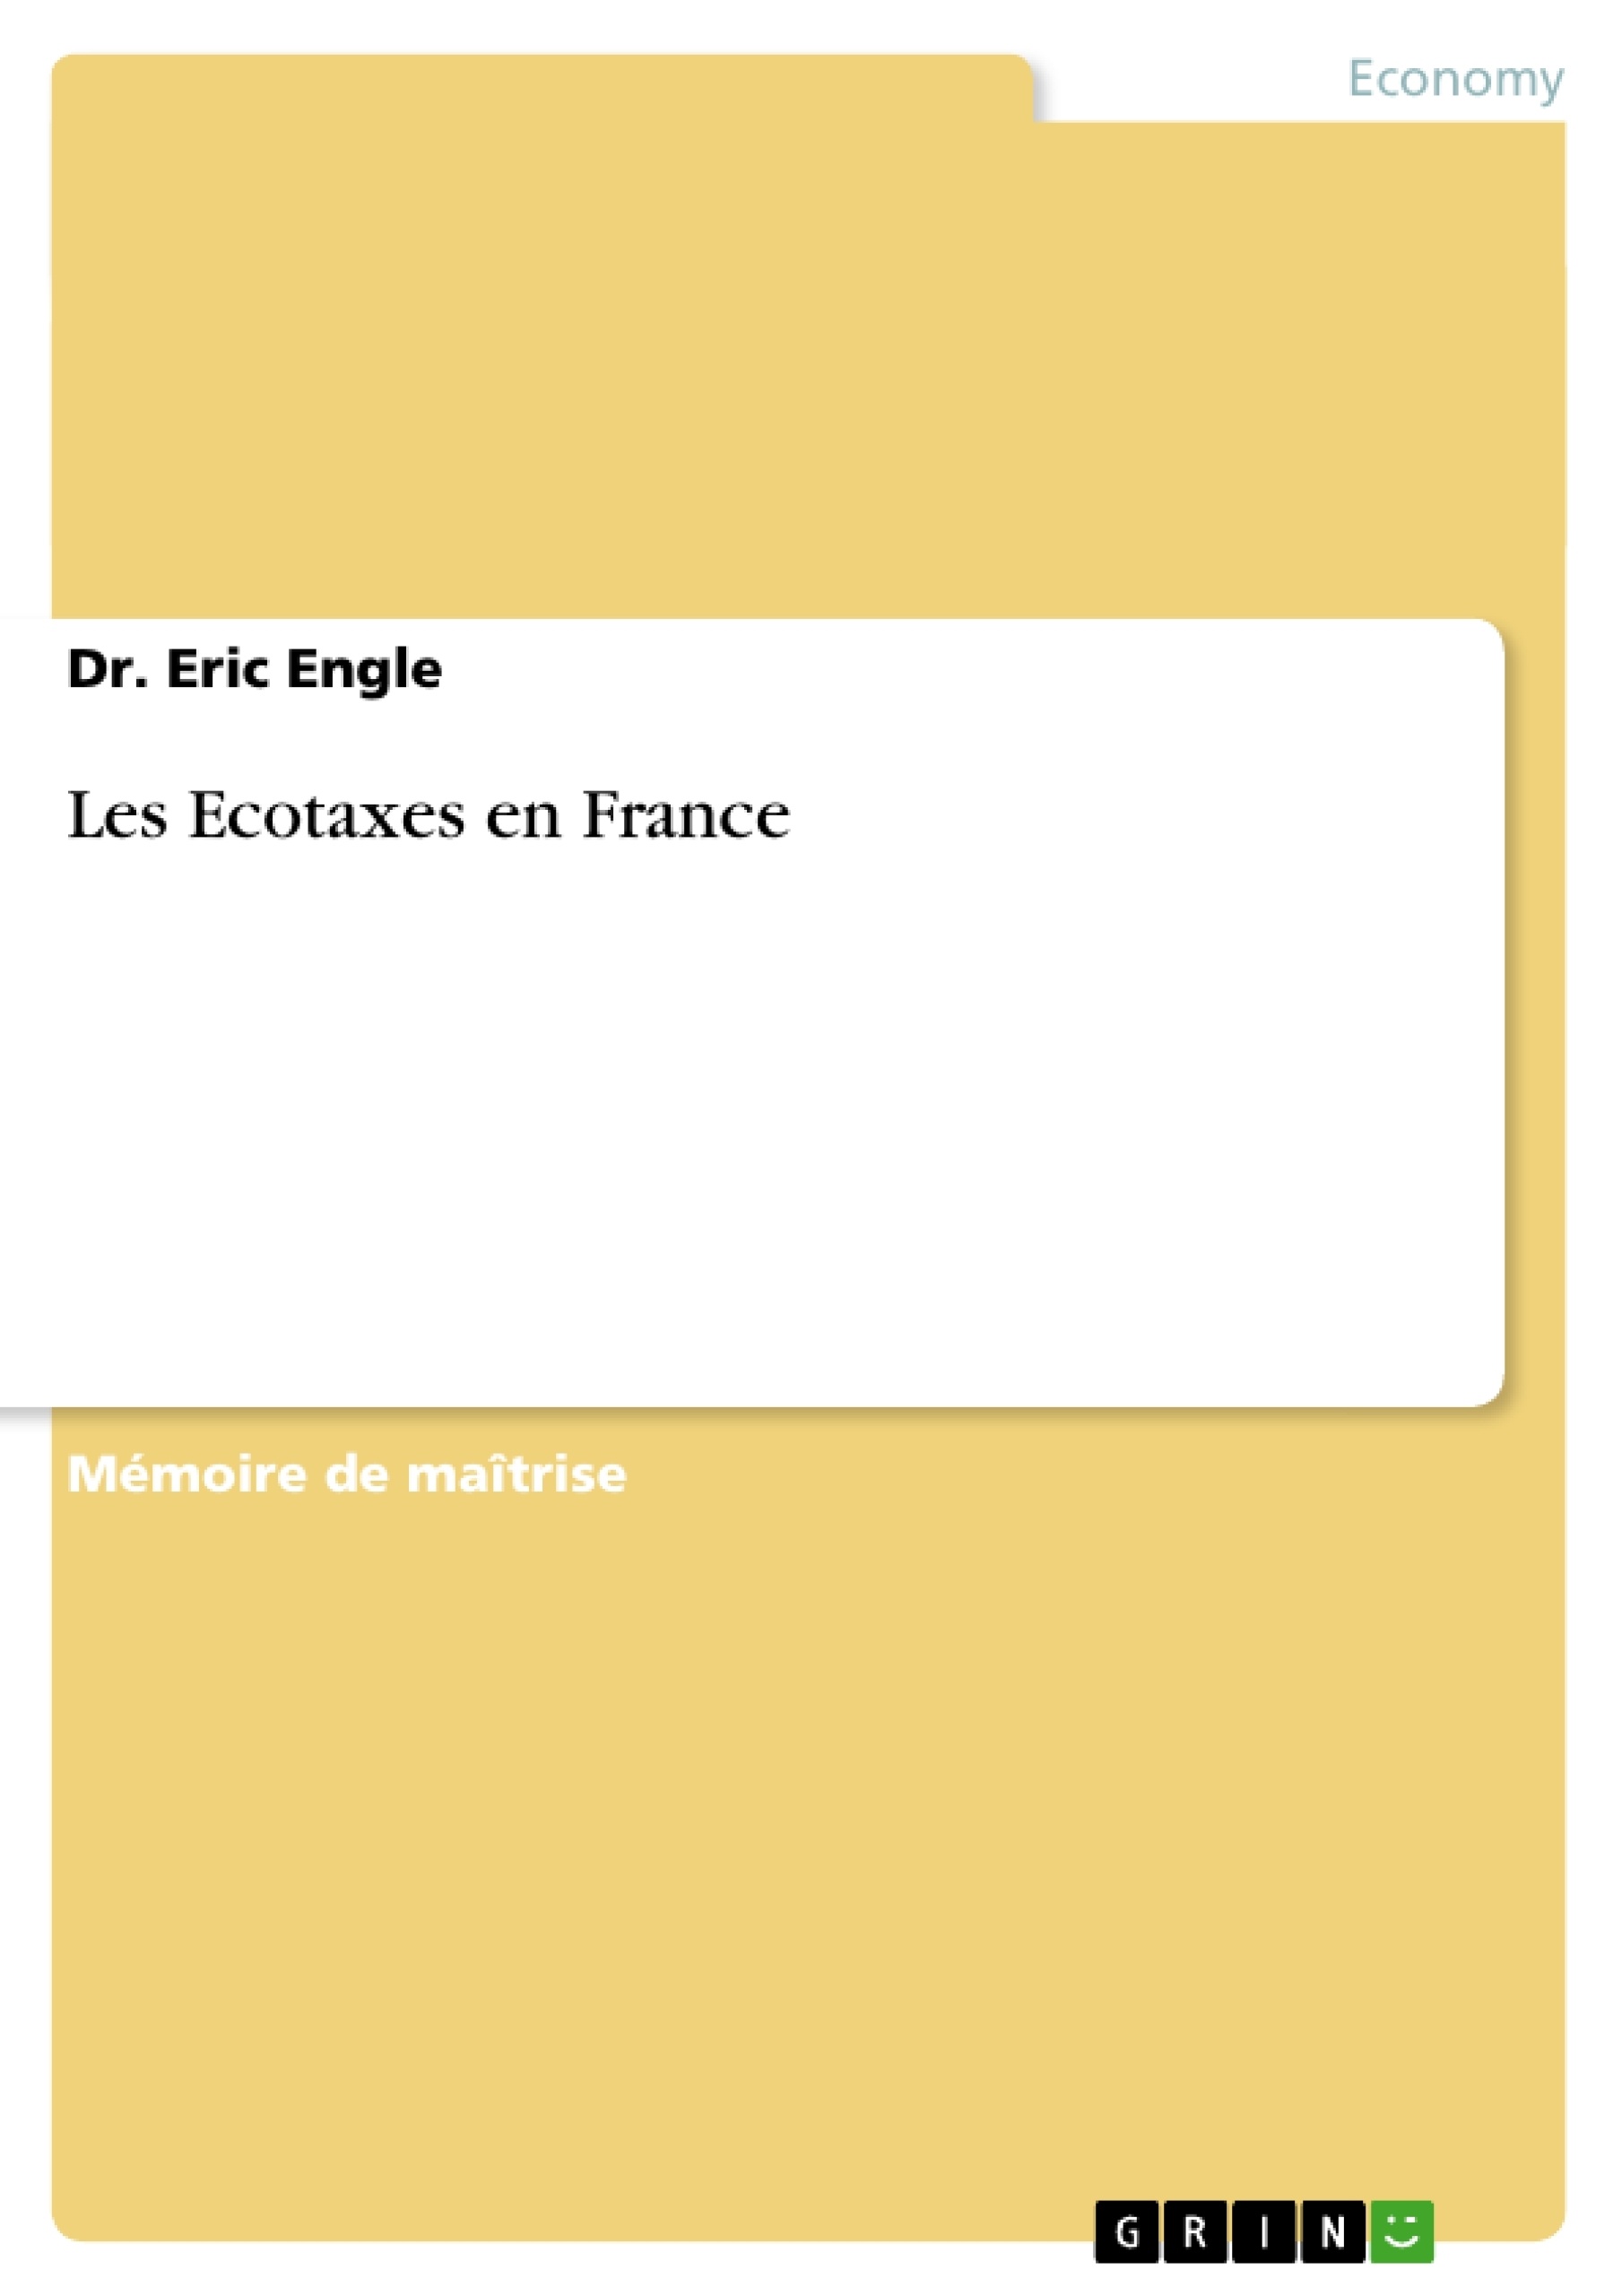 Título: Les Ecotaxes en France